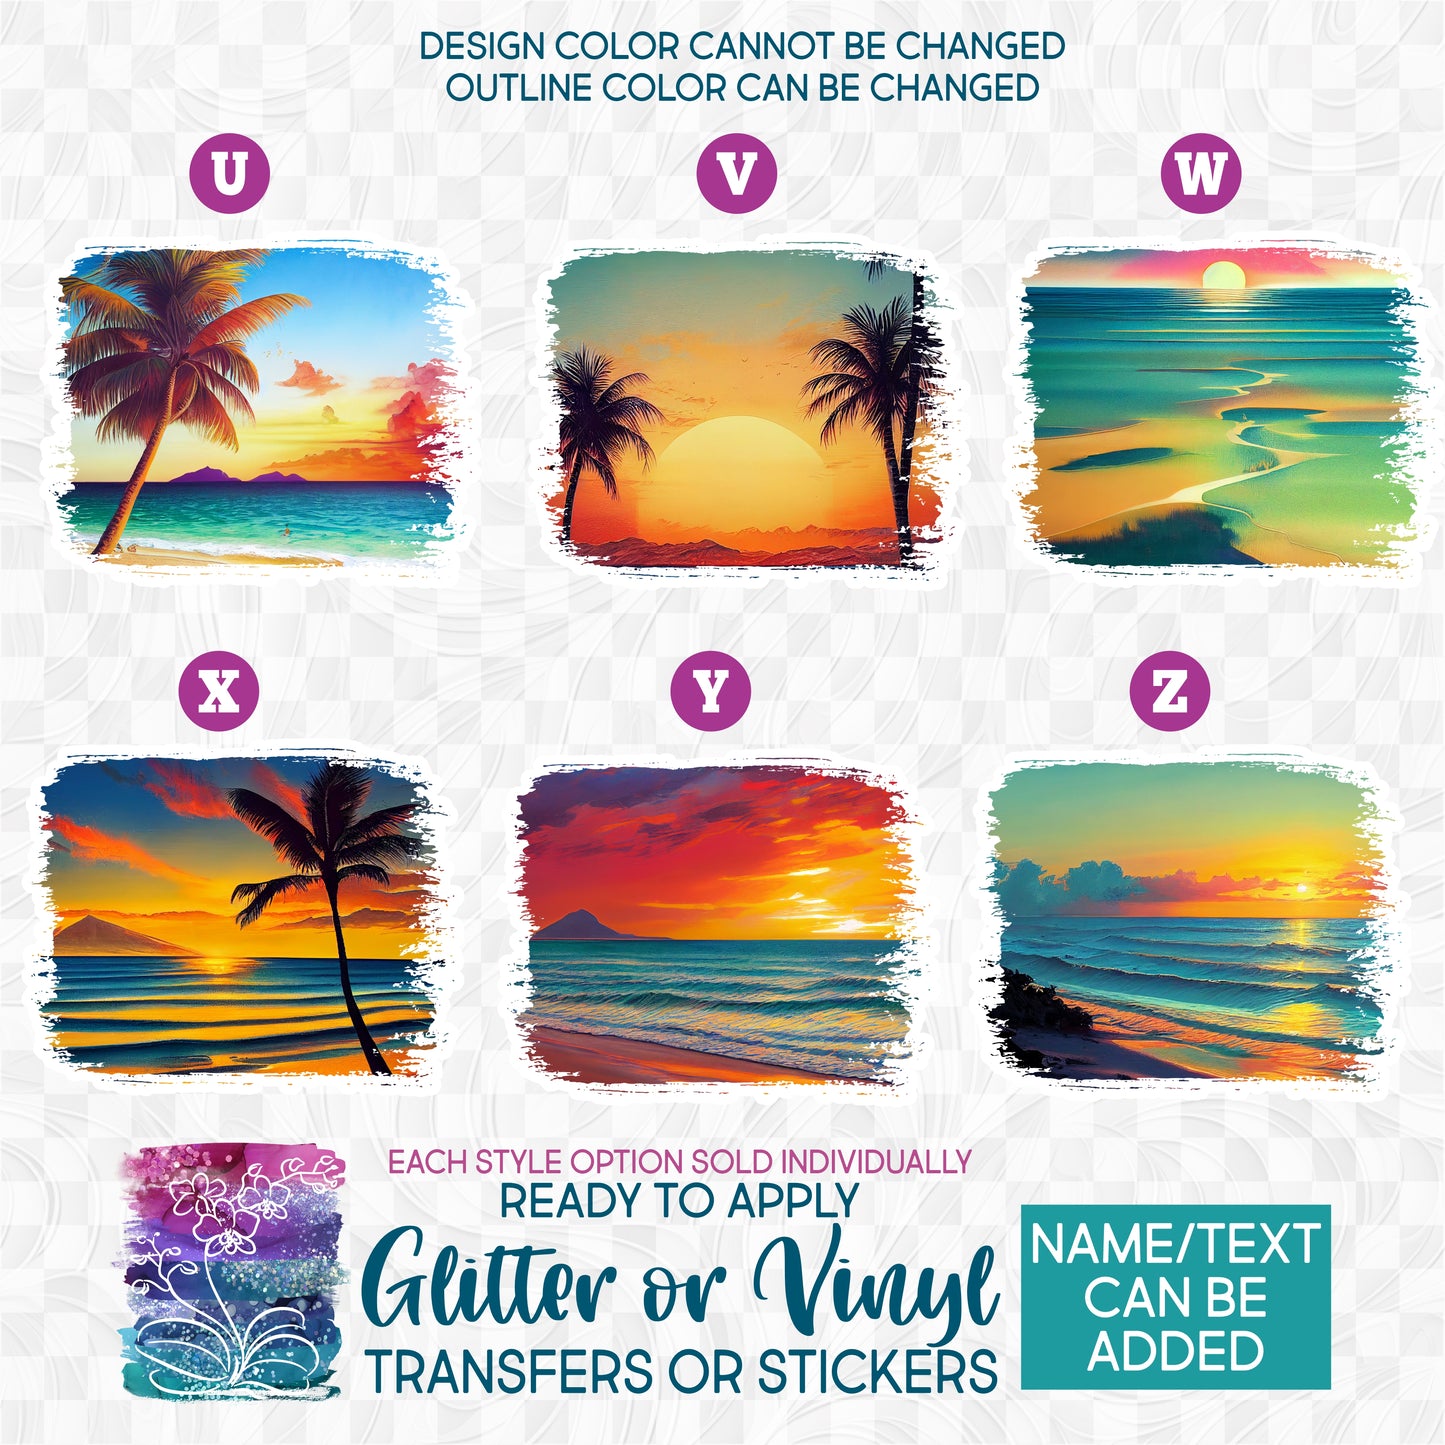 (s204-4) Watercolor Sunset Beach Ocean Tropical Seascape Landscape 3 Glitter or Vinyl Iron-On Transfer or Sticker